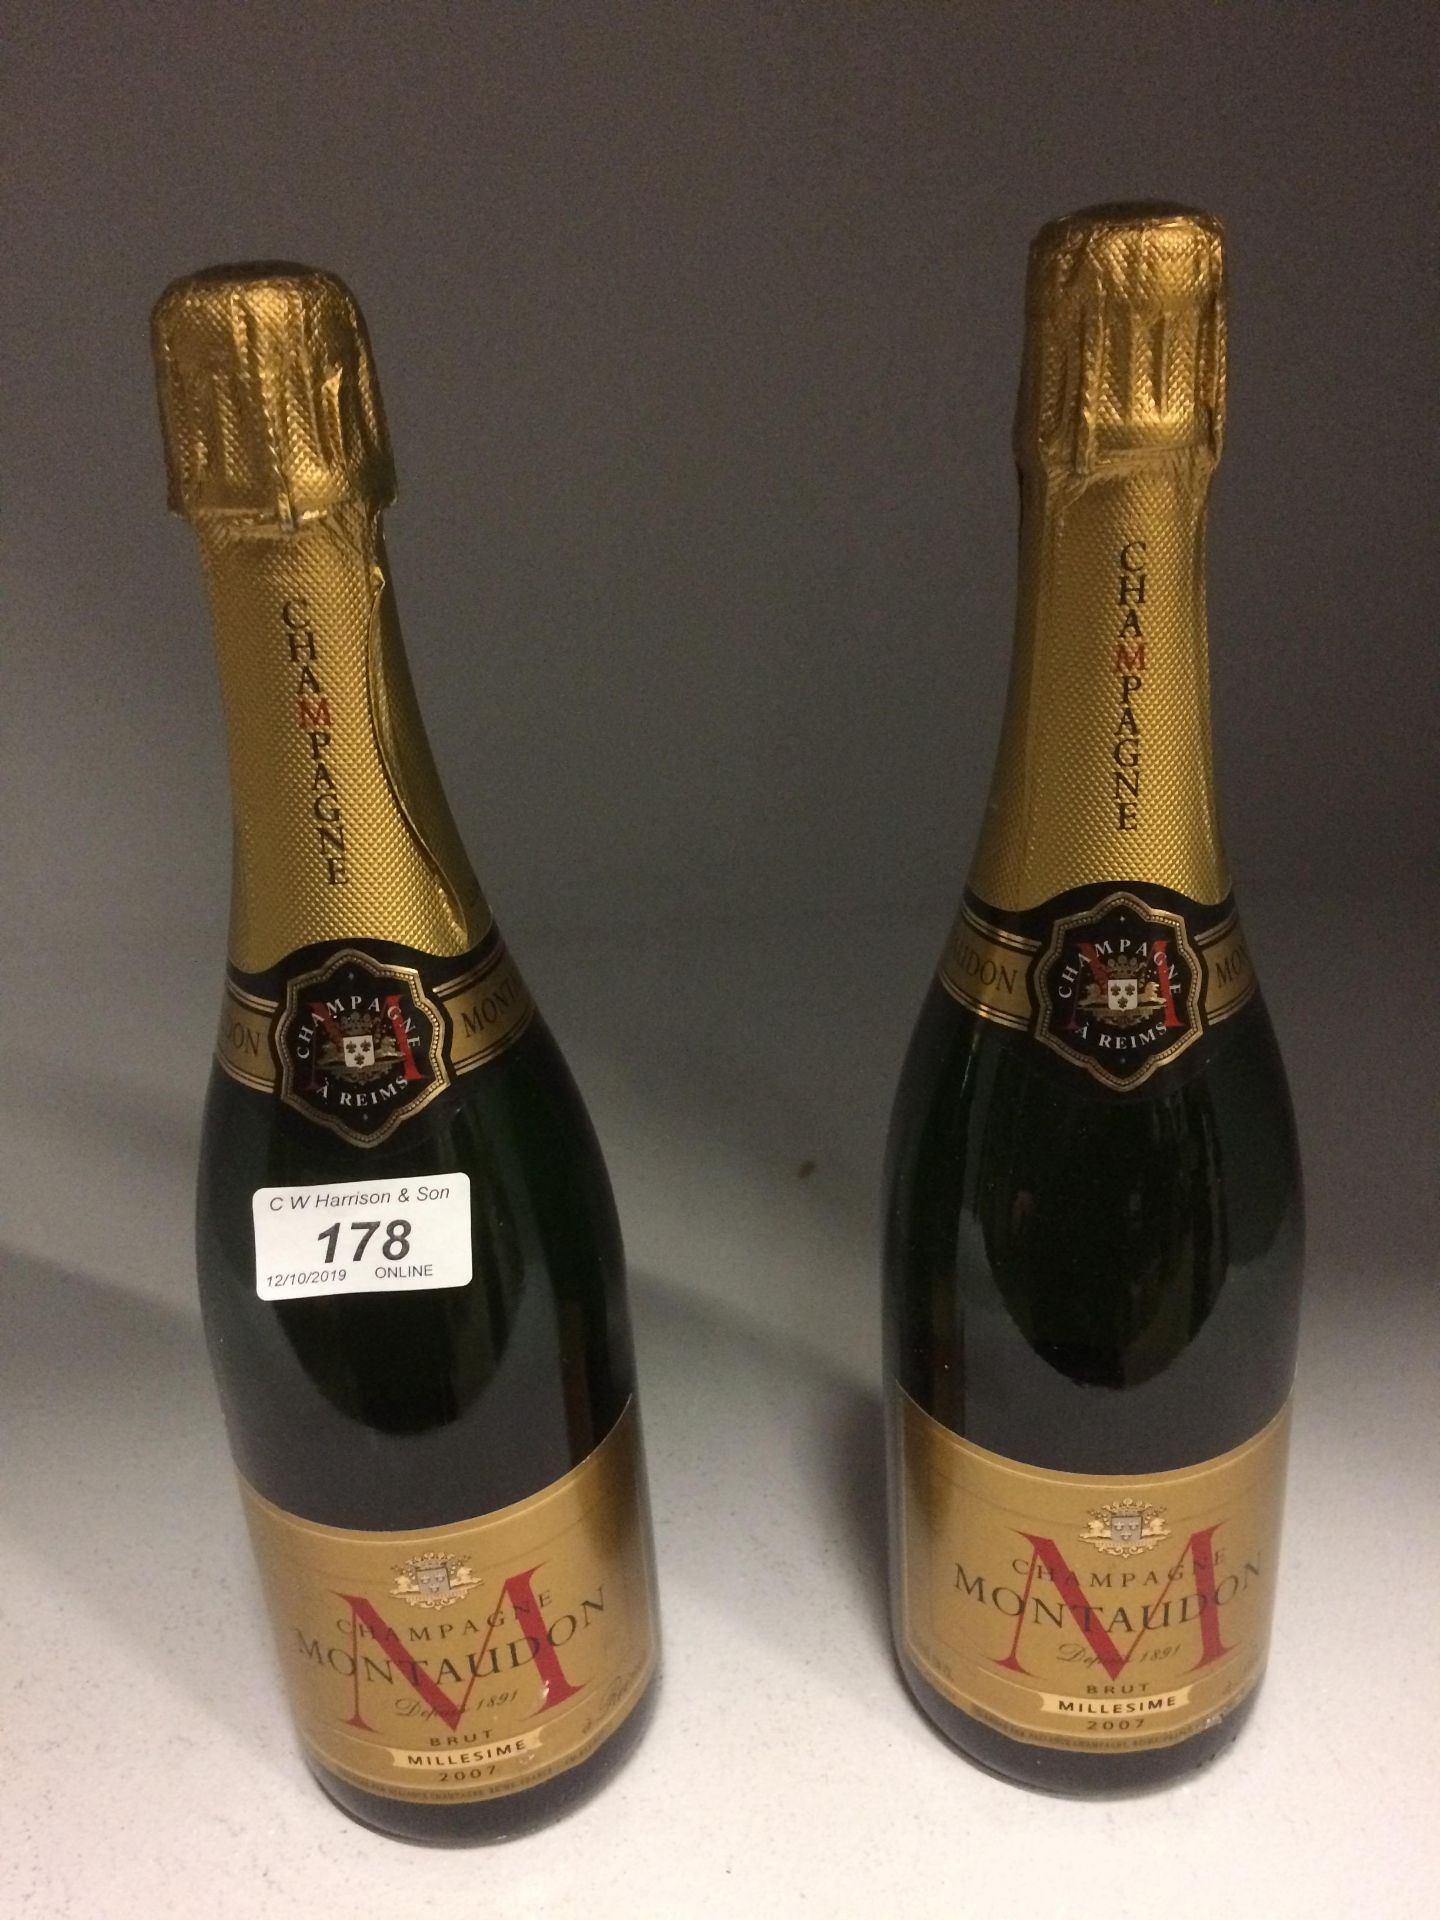 2 x 750ml bottles Montaudon champagne